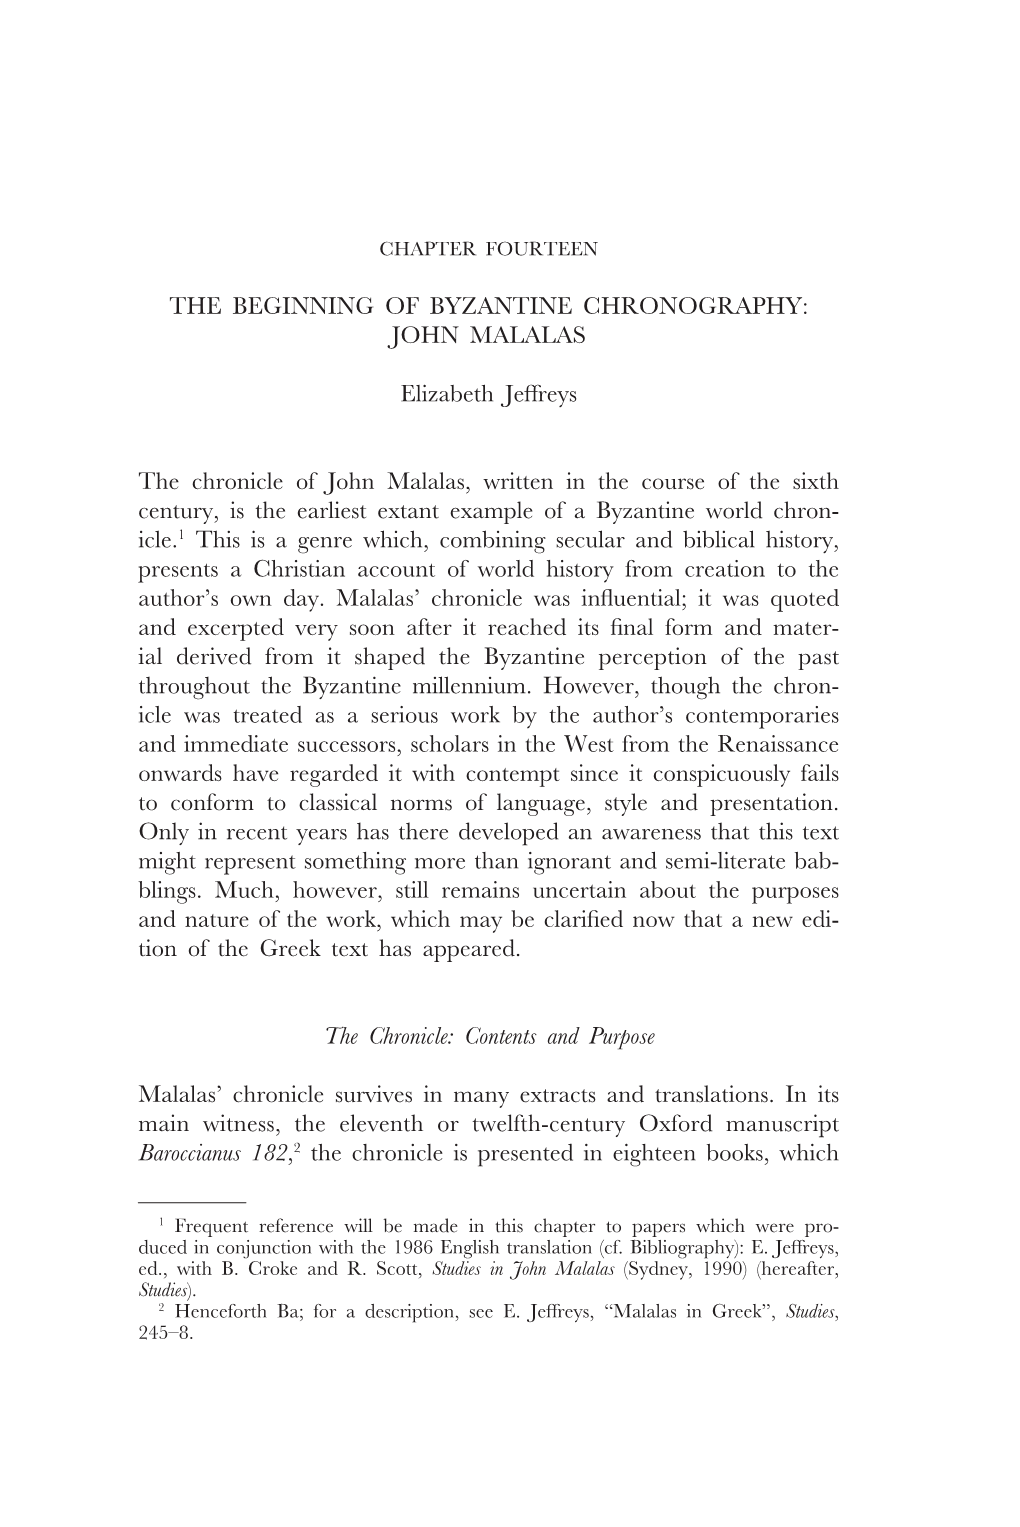 The Beginning of Byzantine Chronography: John Malalas